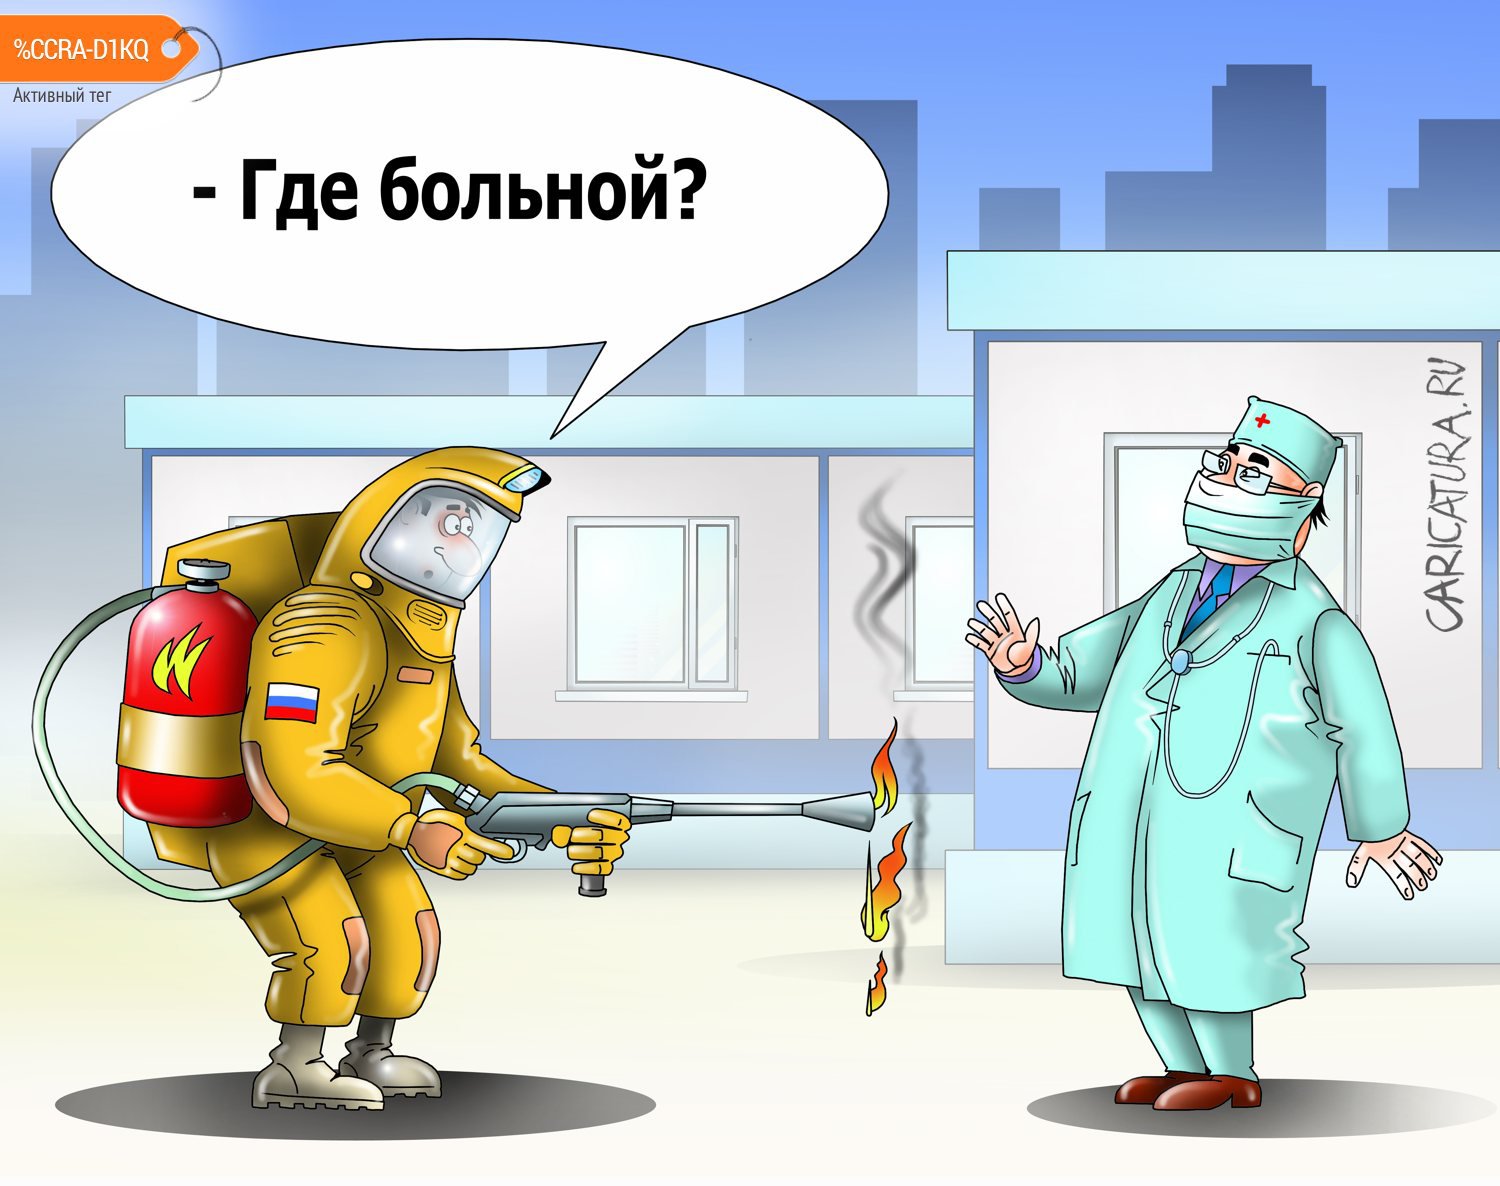 Карикатура "Избыточные меры против коронавируса не нужны", Сергей Корсун